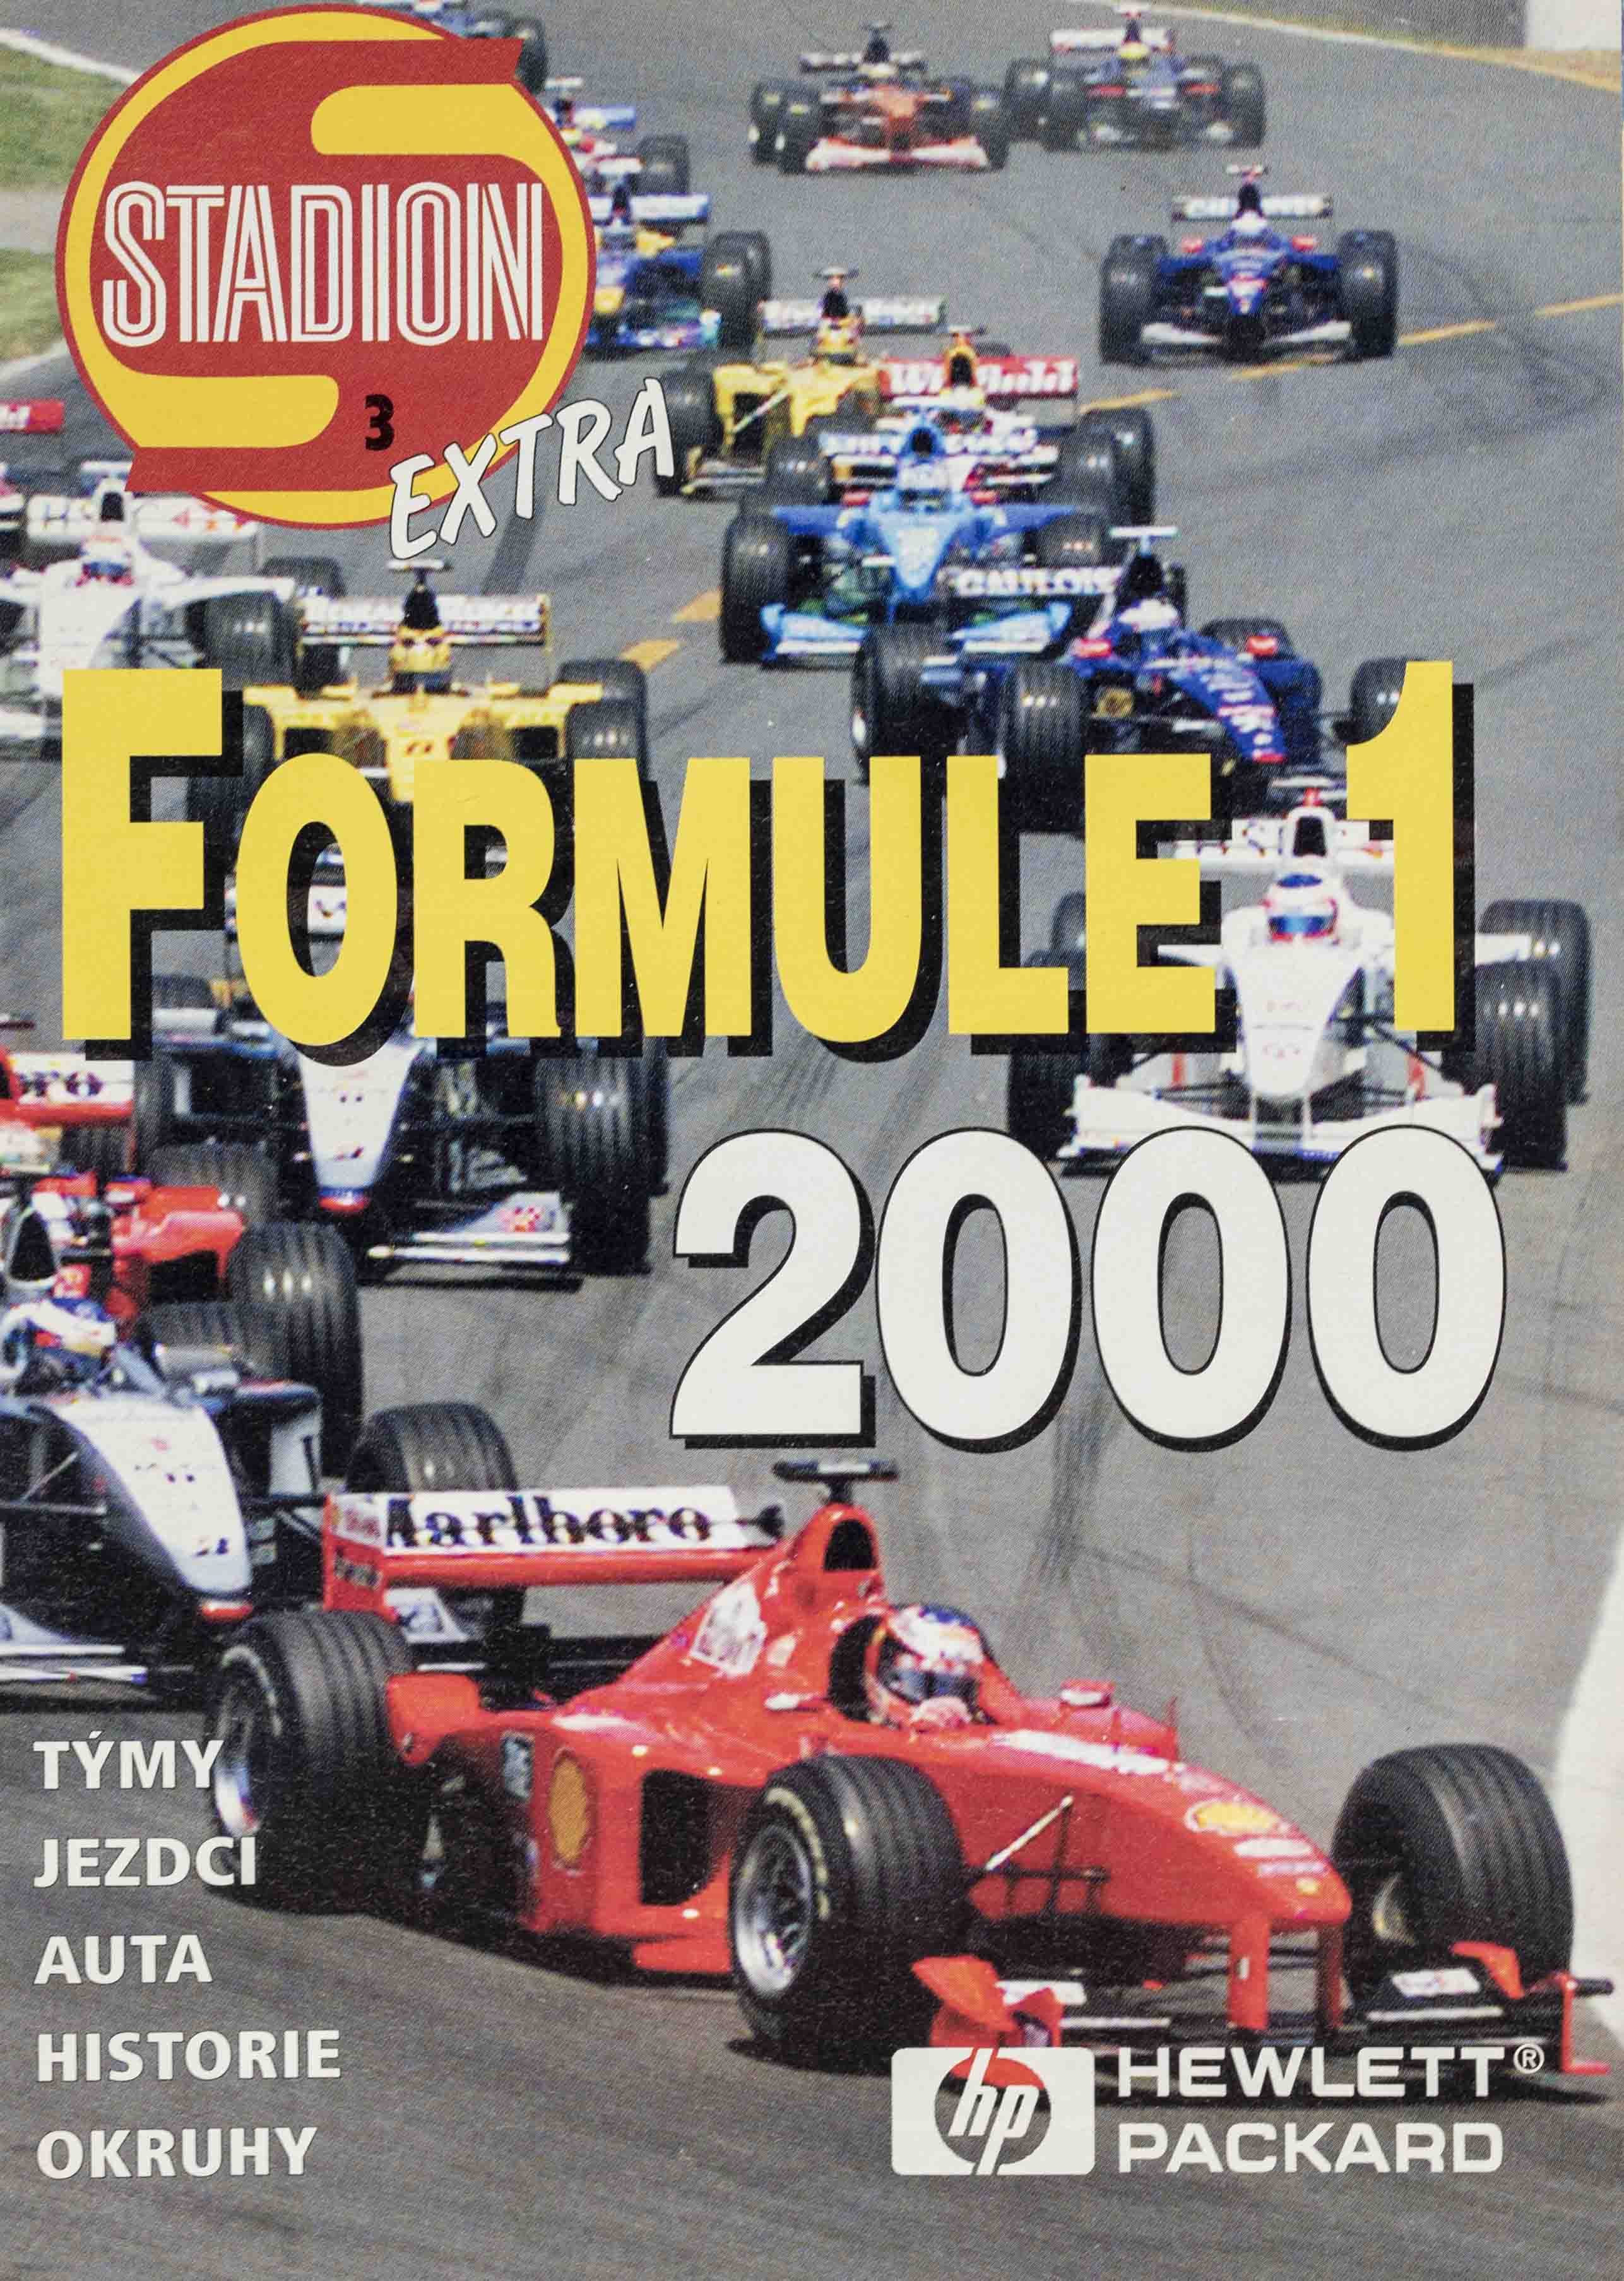 Stadion extra 3, Formule 1, 2000